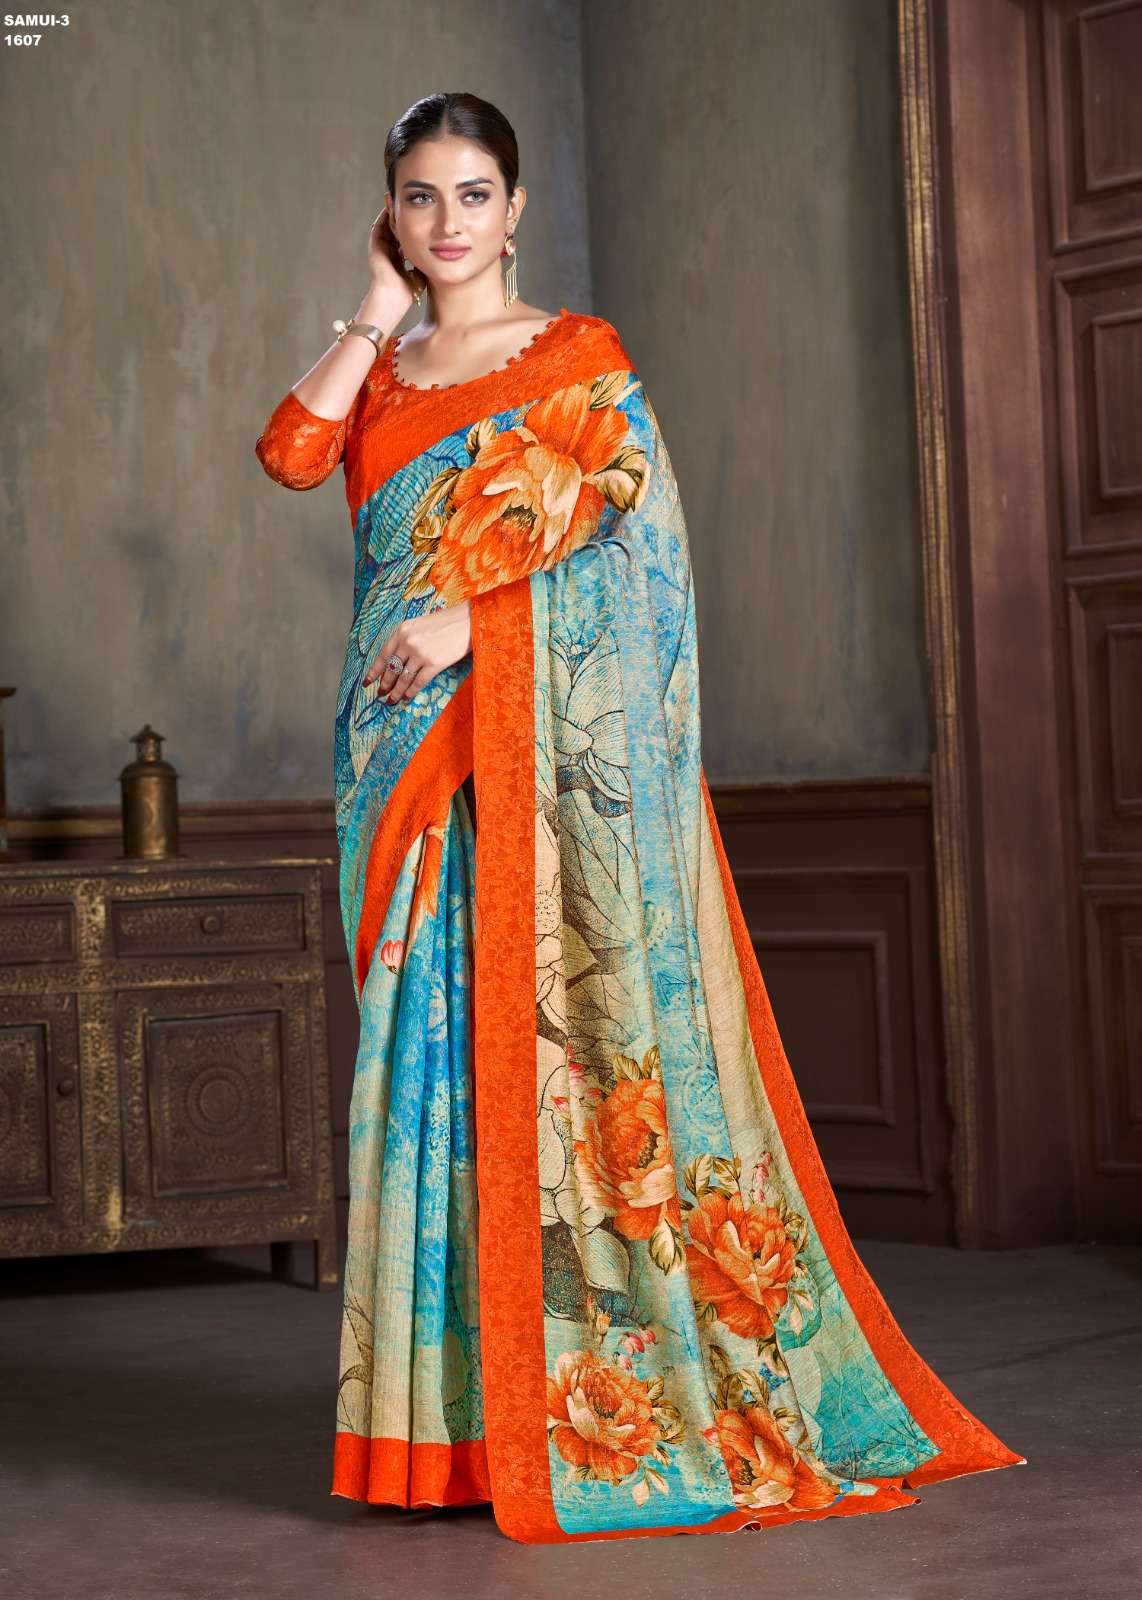 jivora shyna samui 2 premium natural silk attrective look saree cataloug